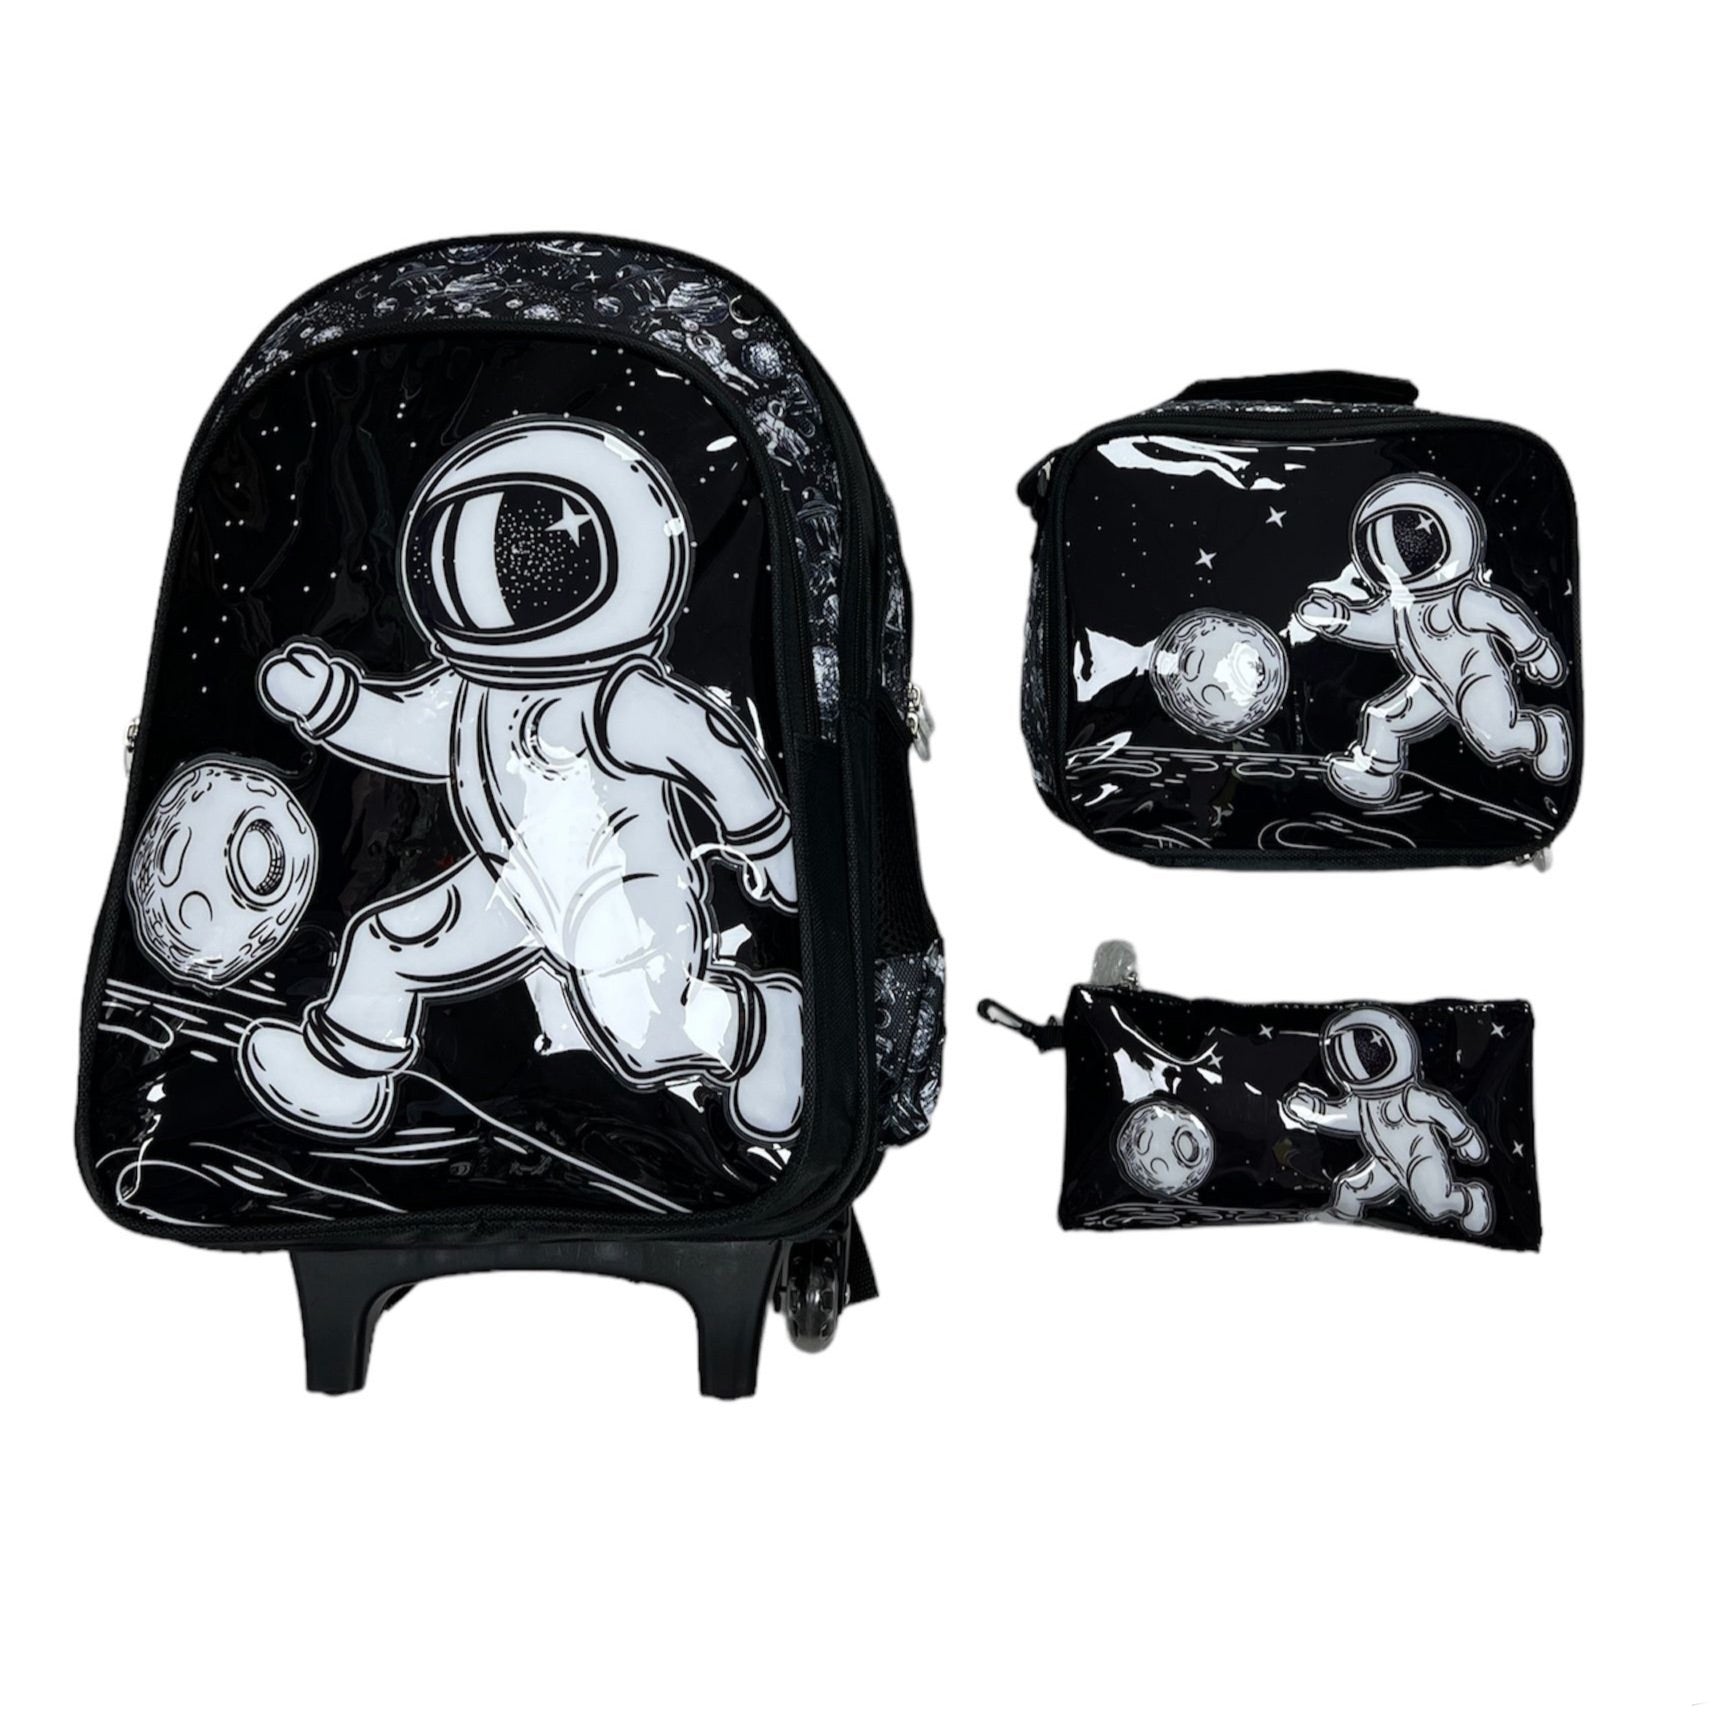 Back to School Backpack Set Astronaut || شنطة اطفال ١٧ انش طقم ٣ قطع موديل رجل الفضاء